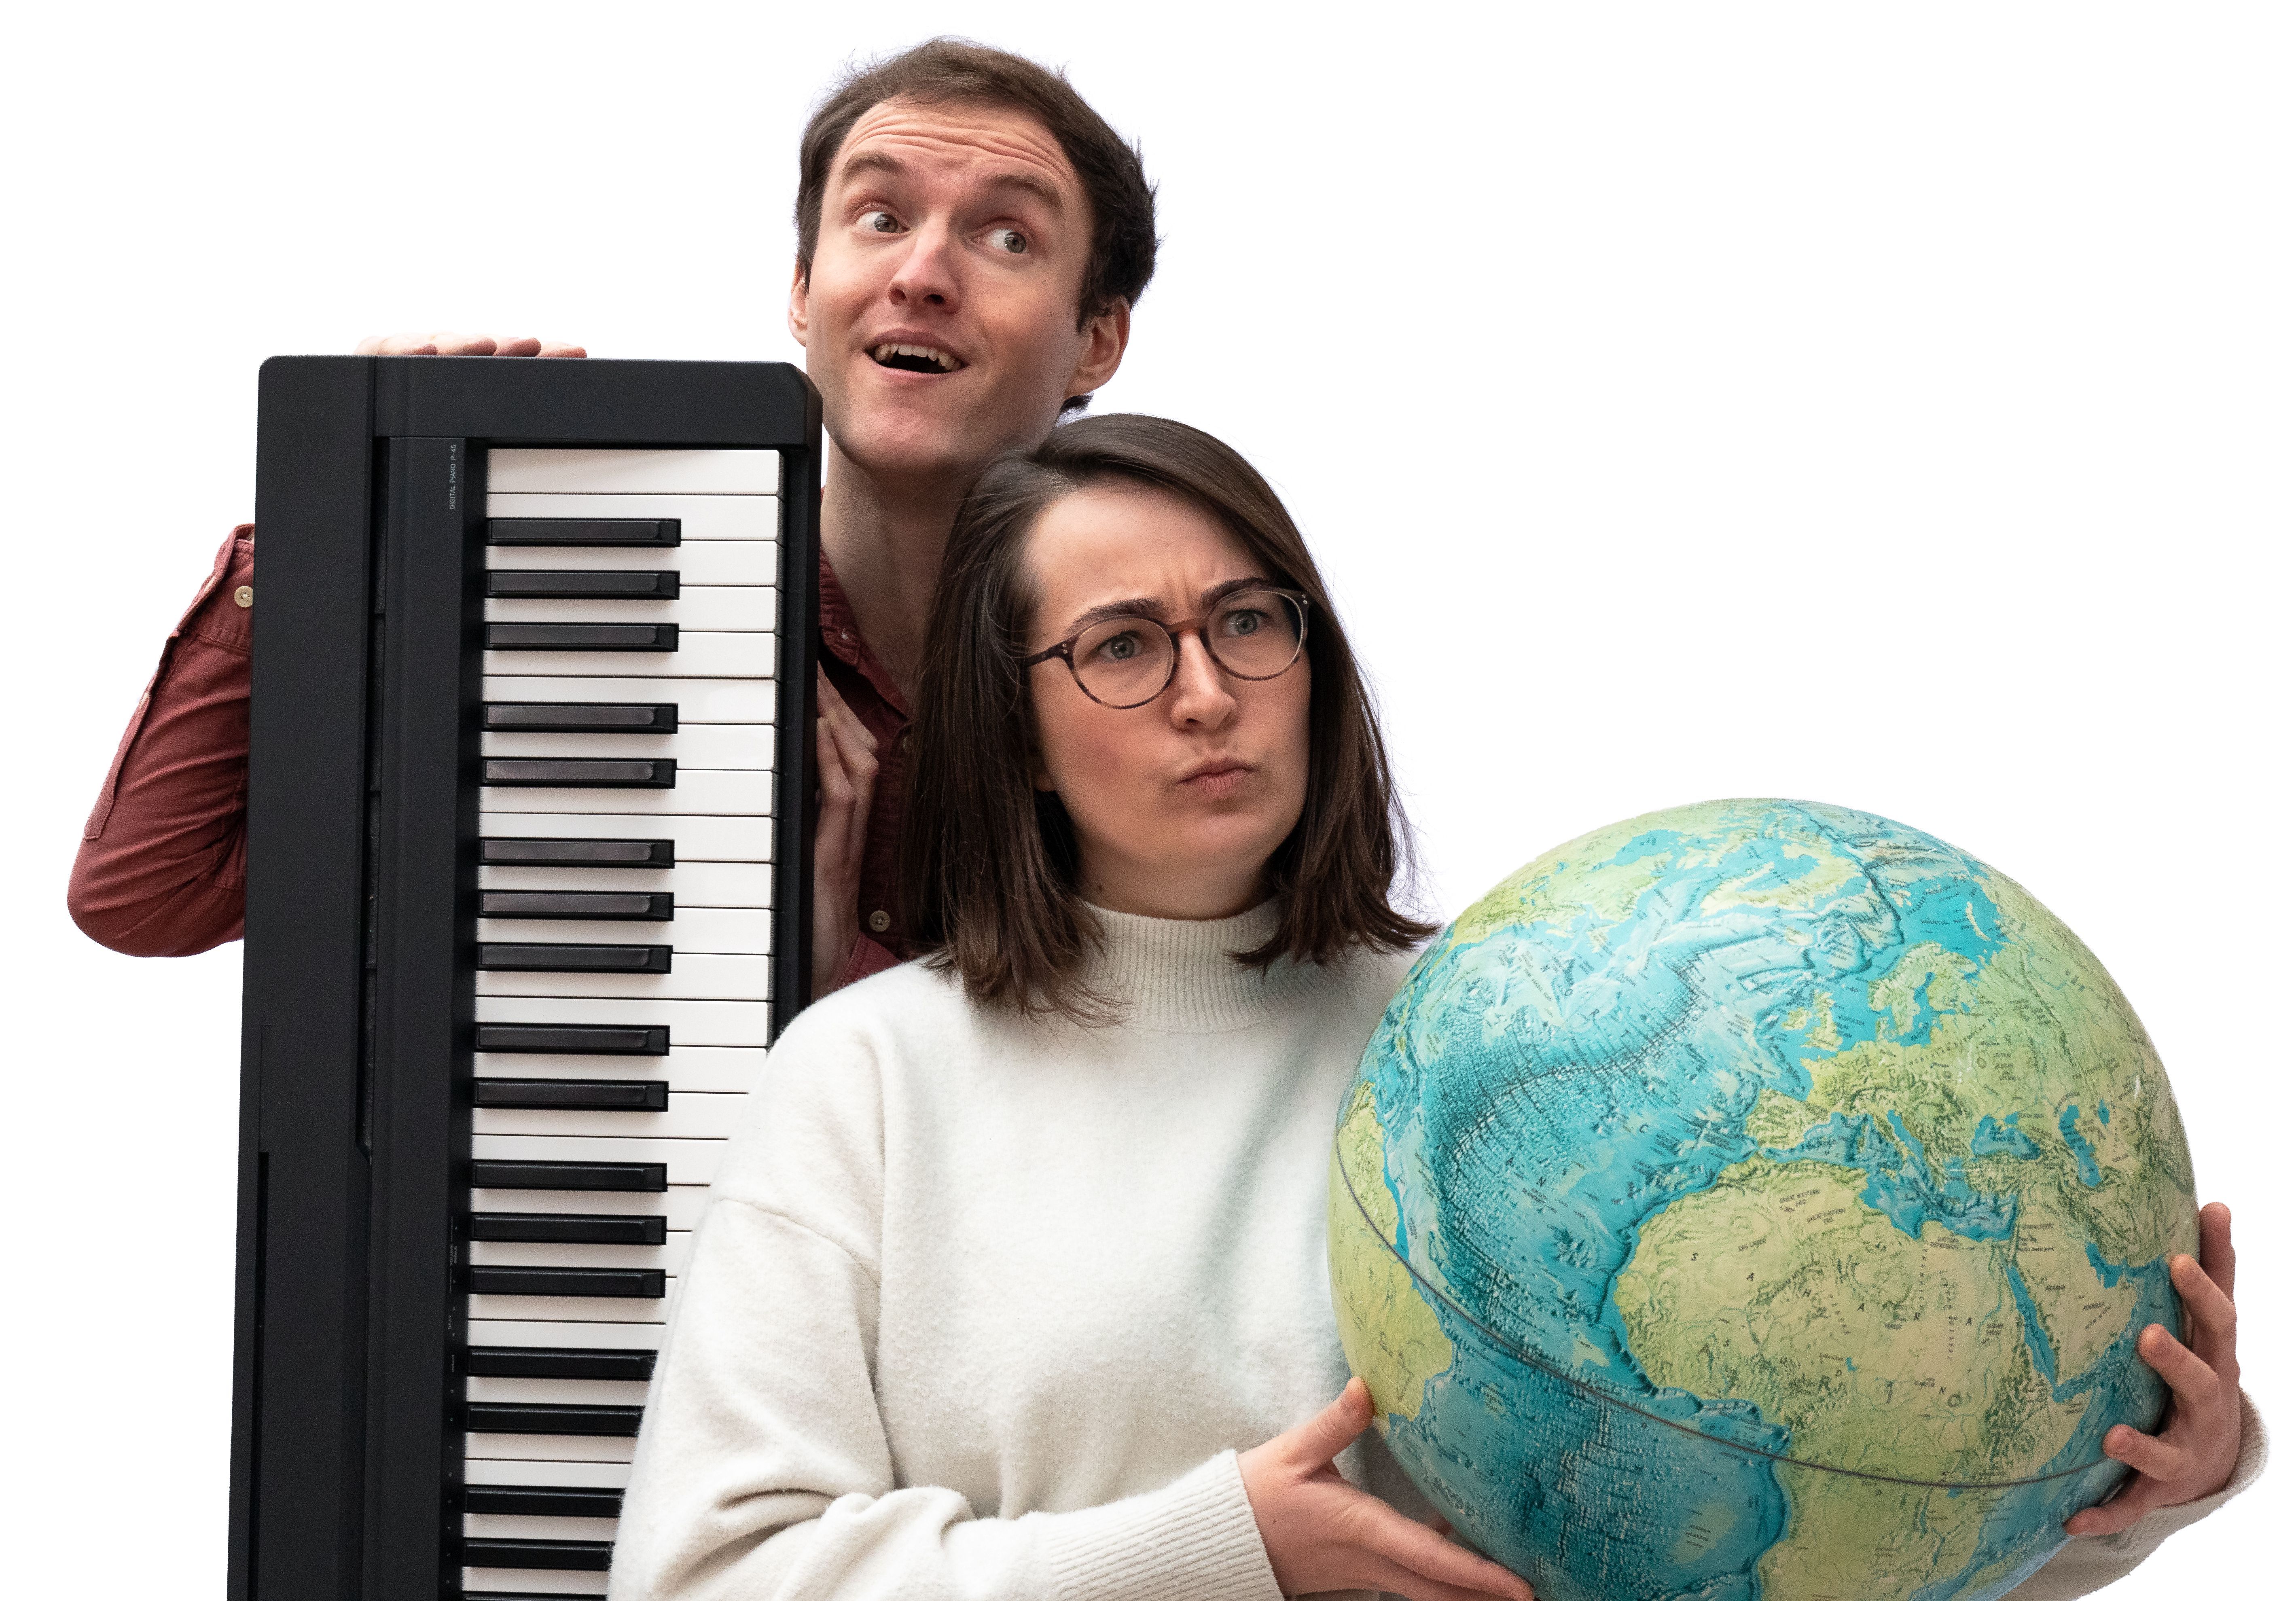 man holind a keyboard woman holding a globe